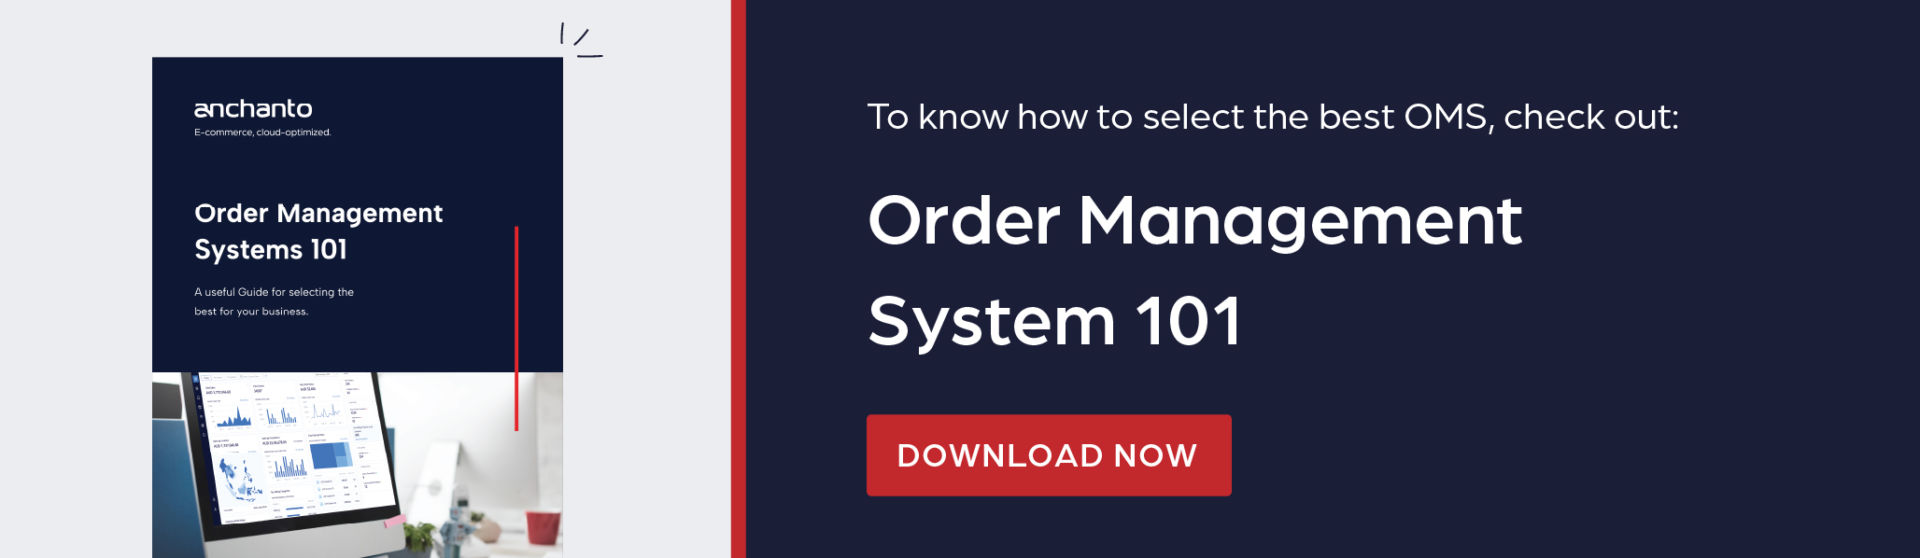 Anchanto-Order-Management-System